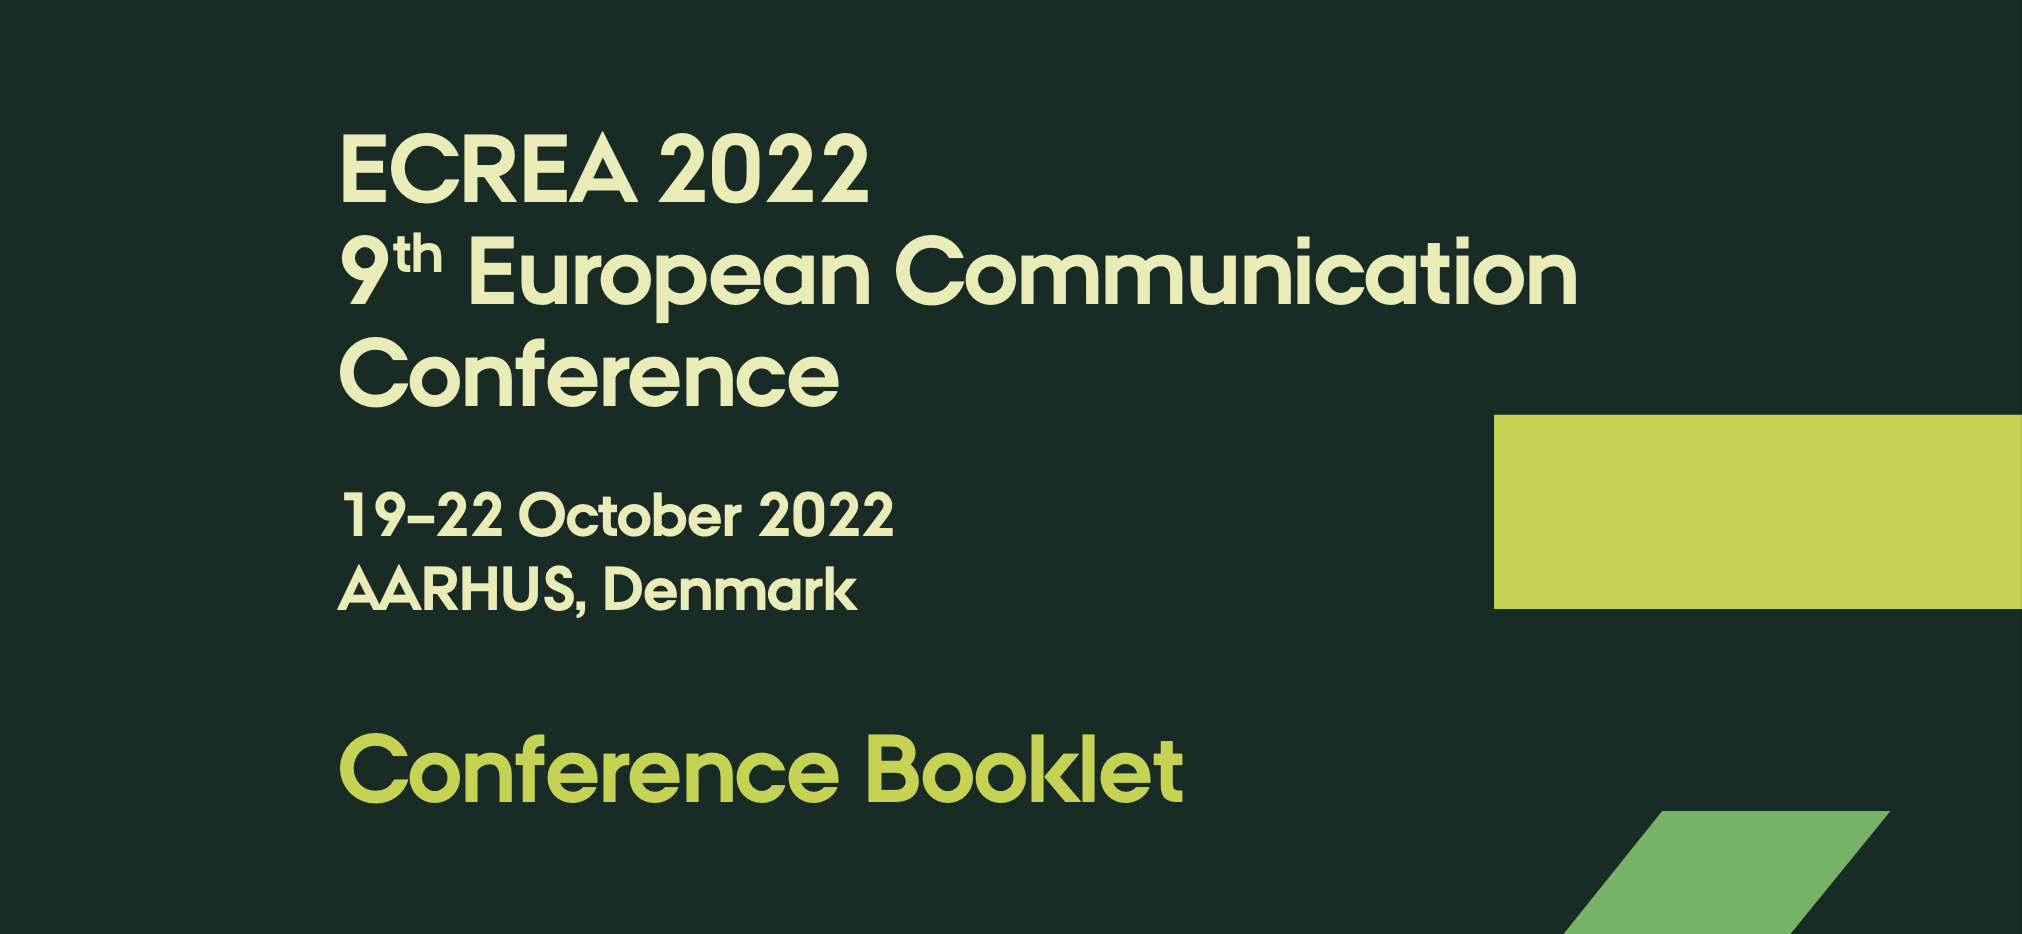 2022px x 934px - ECREA 2022 9th European Communication Conference Conference Booklet